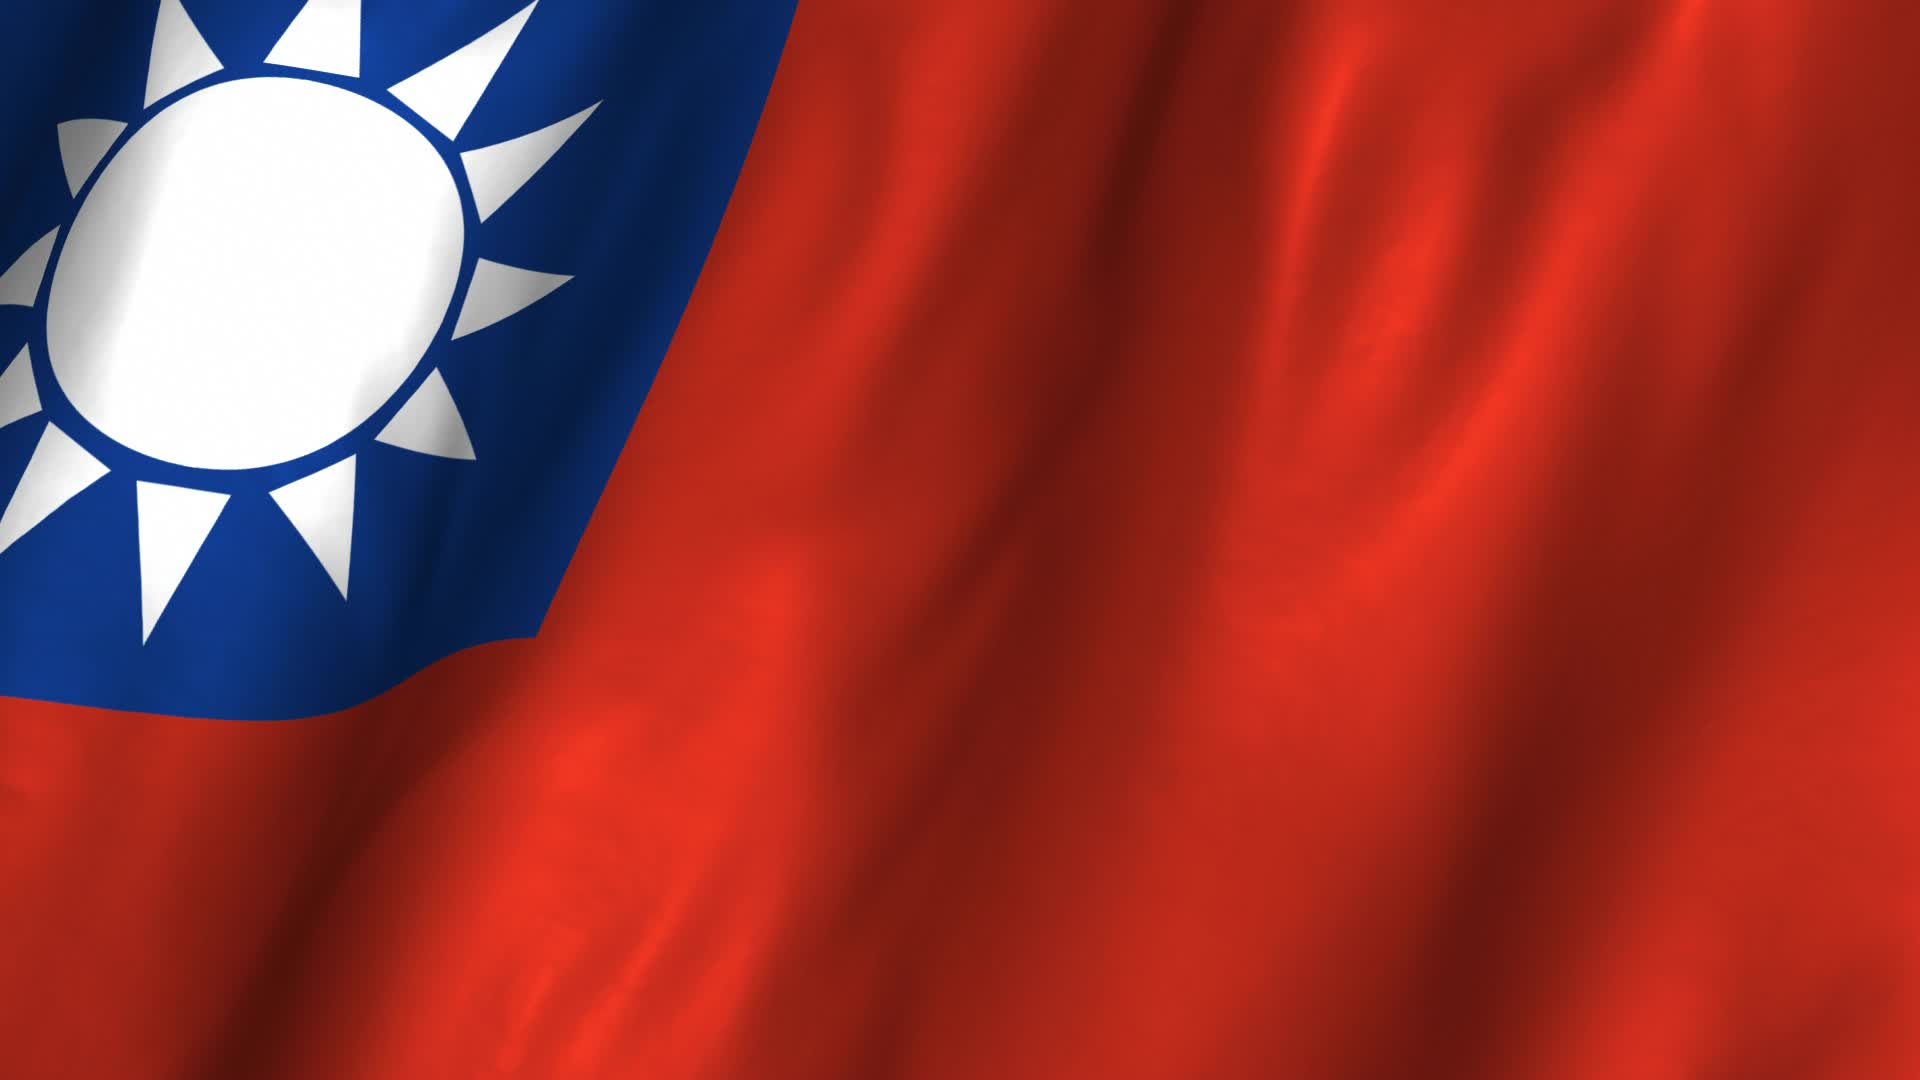 Taiwan Flag Waving HD Wallpaper Background Image